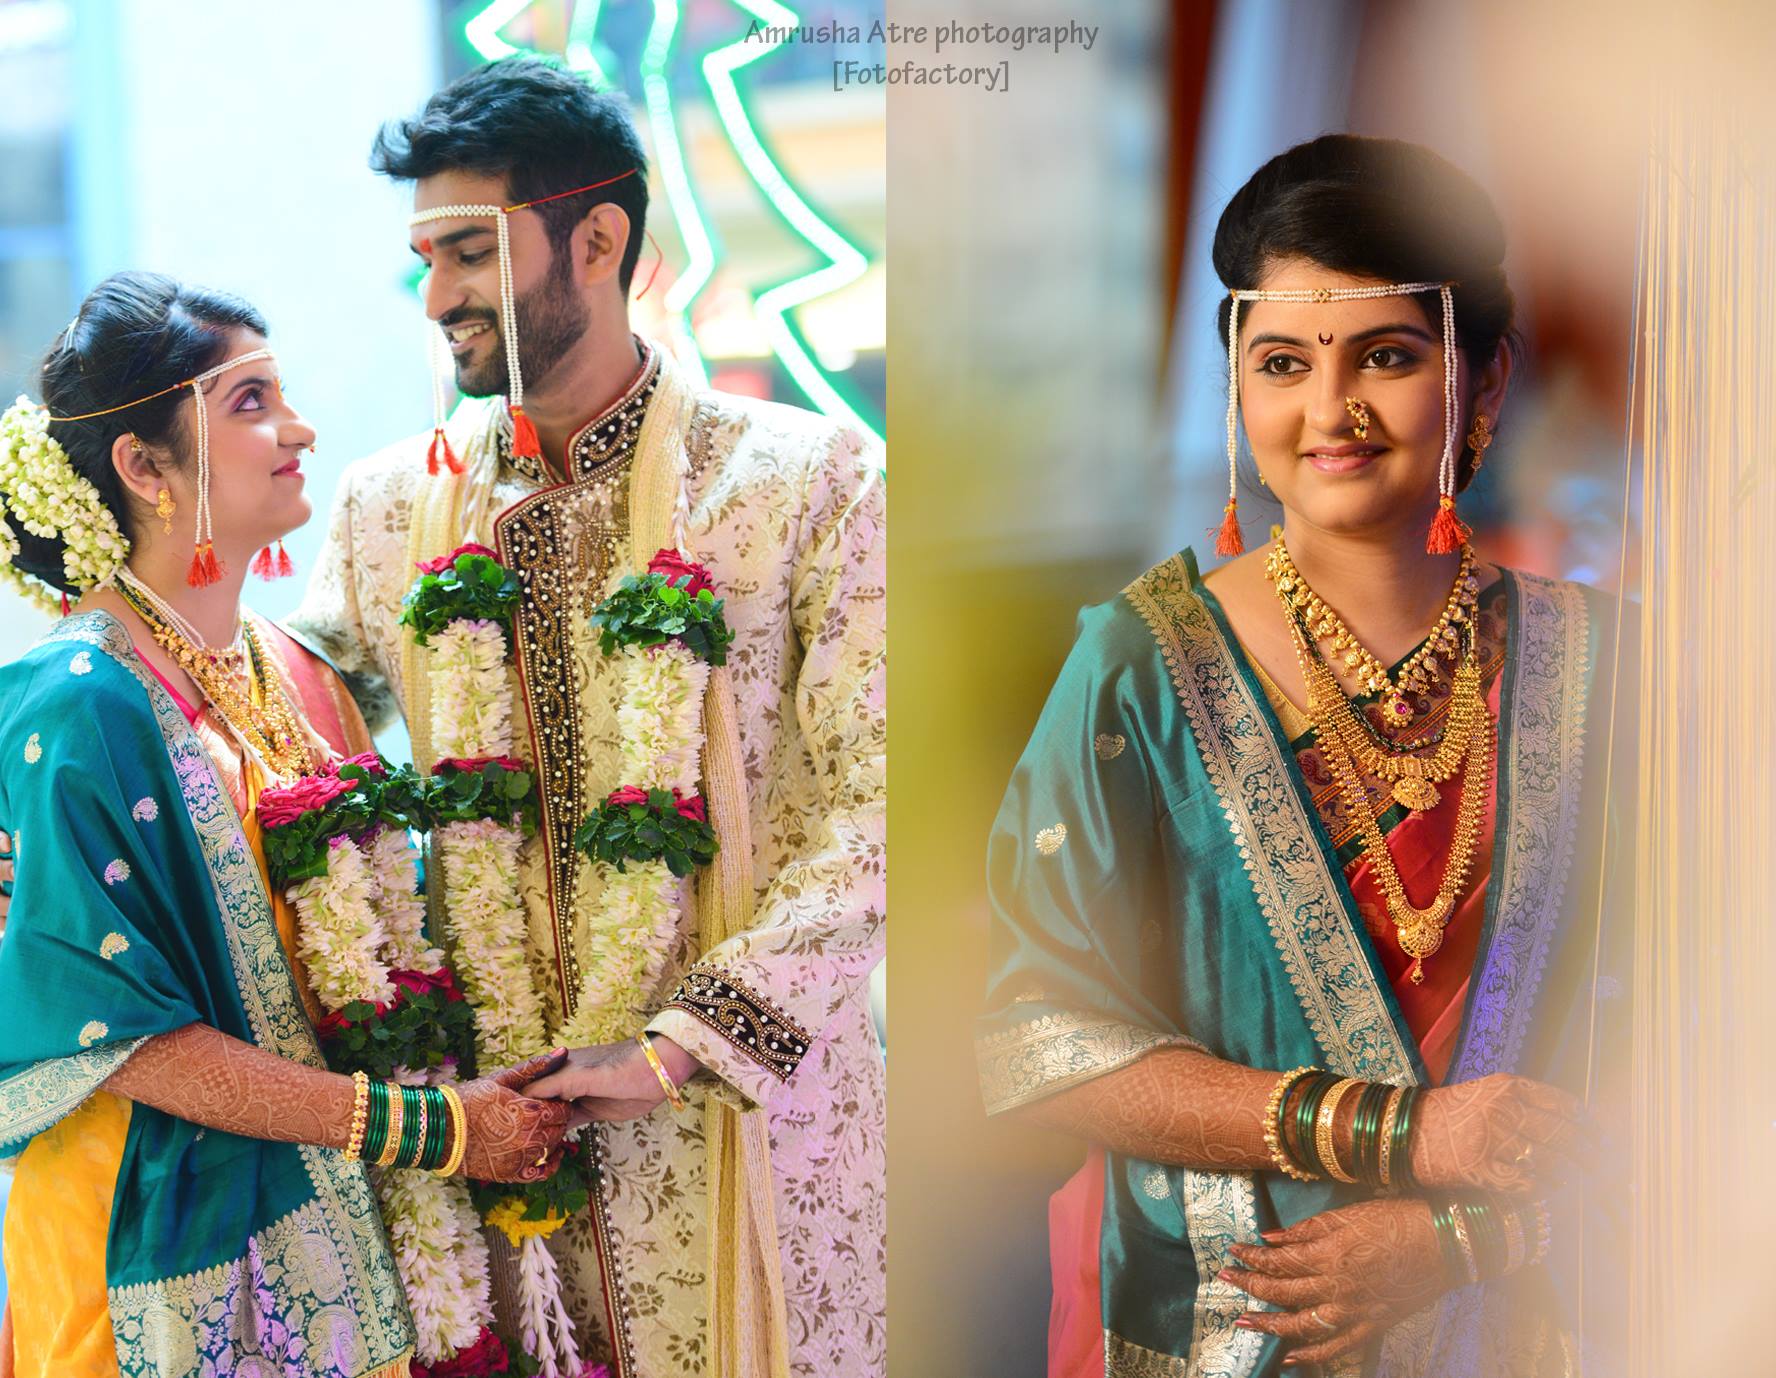 Fotofactory Wedding Photographer, Mumbai